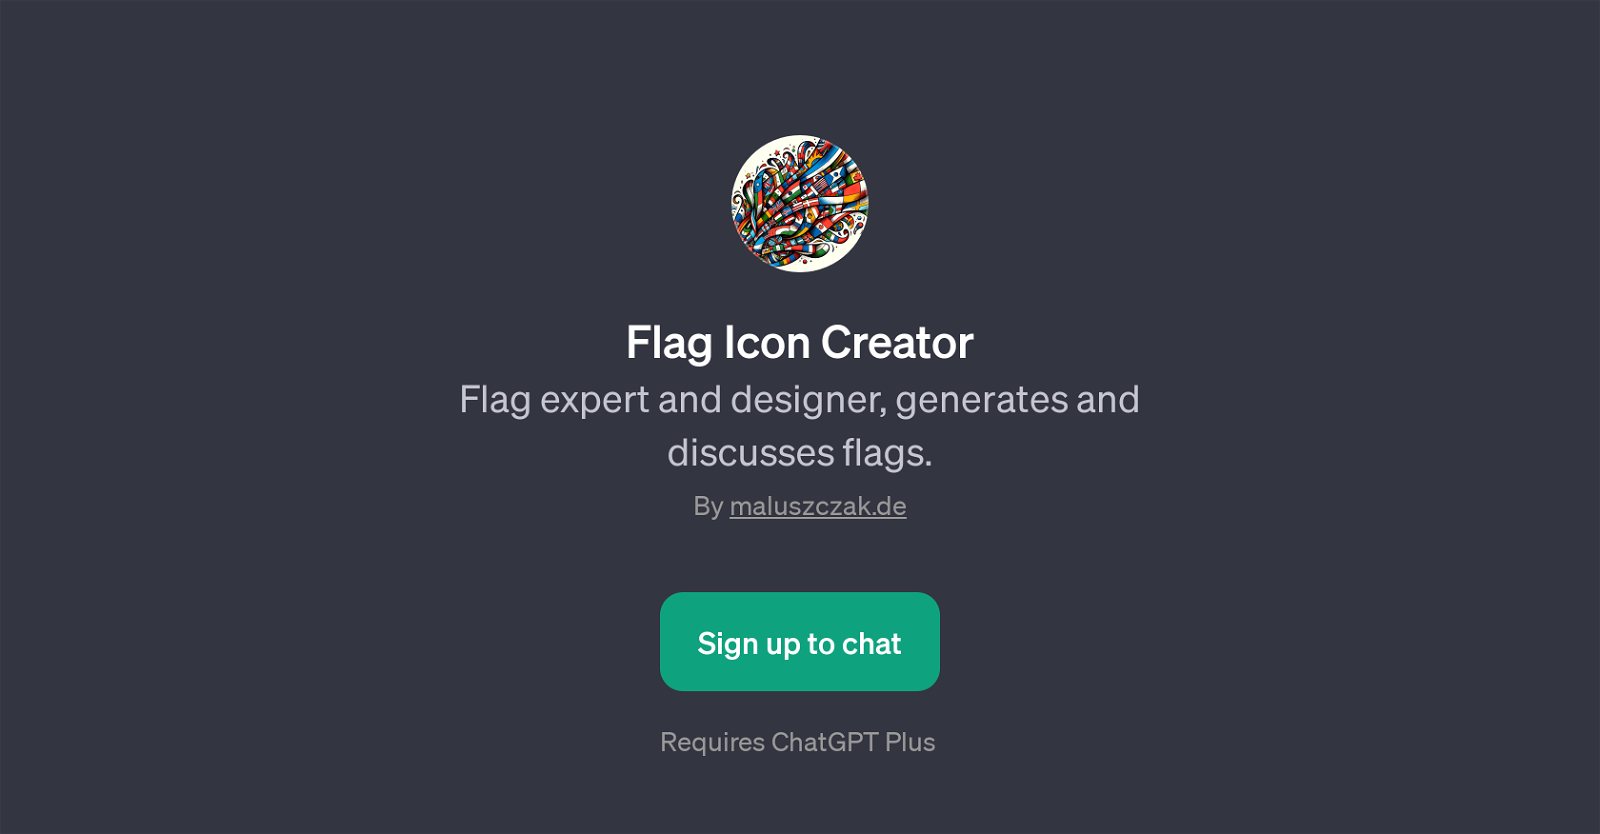 Flag Icon Creator website